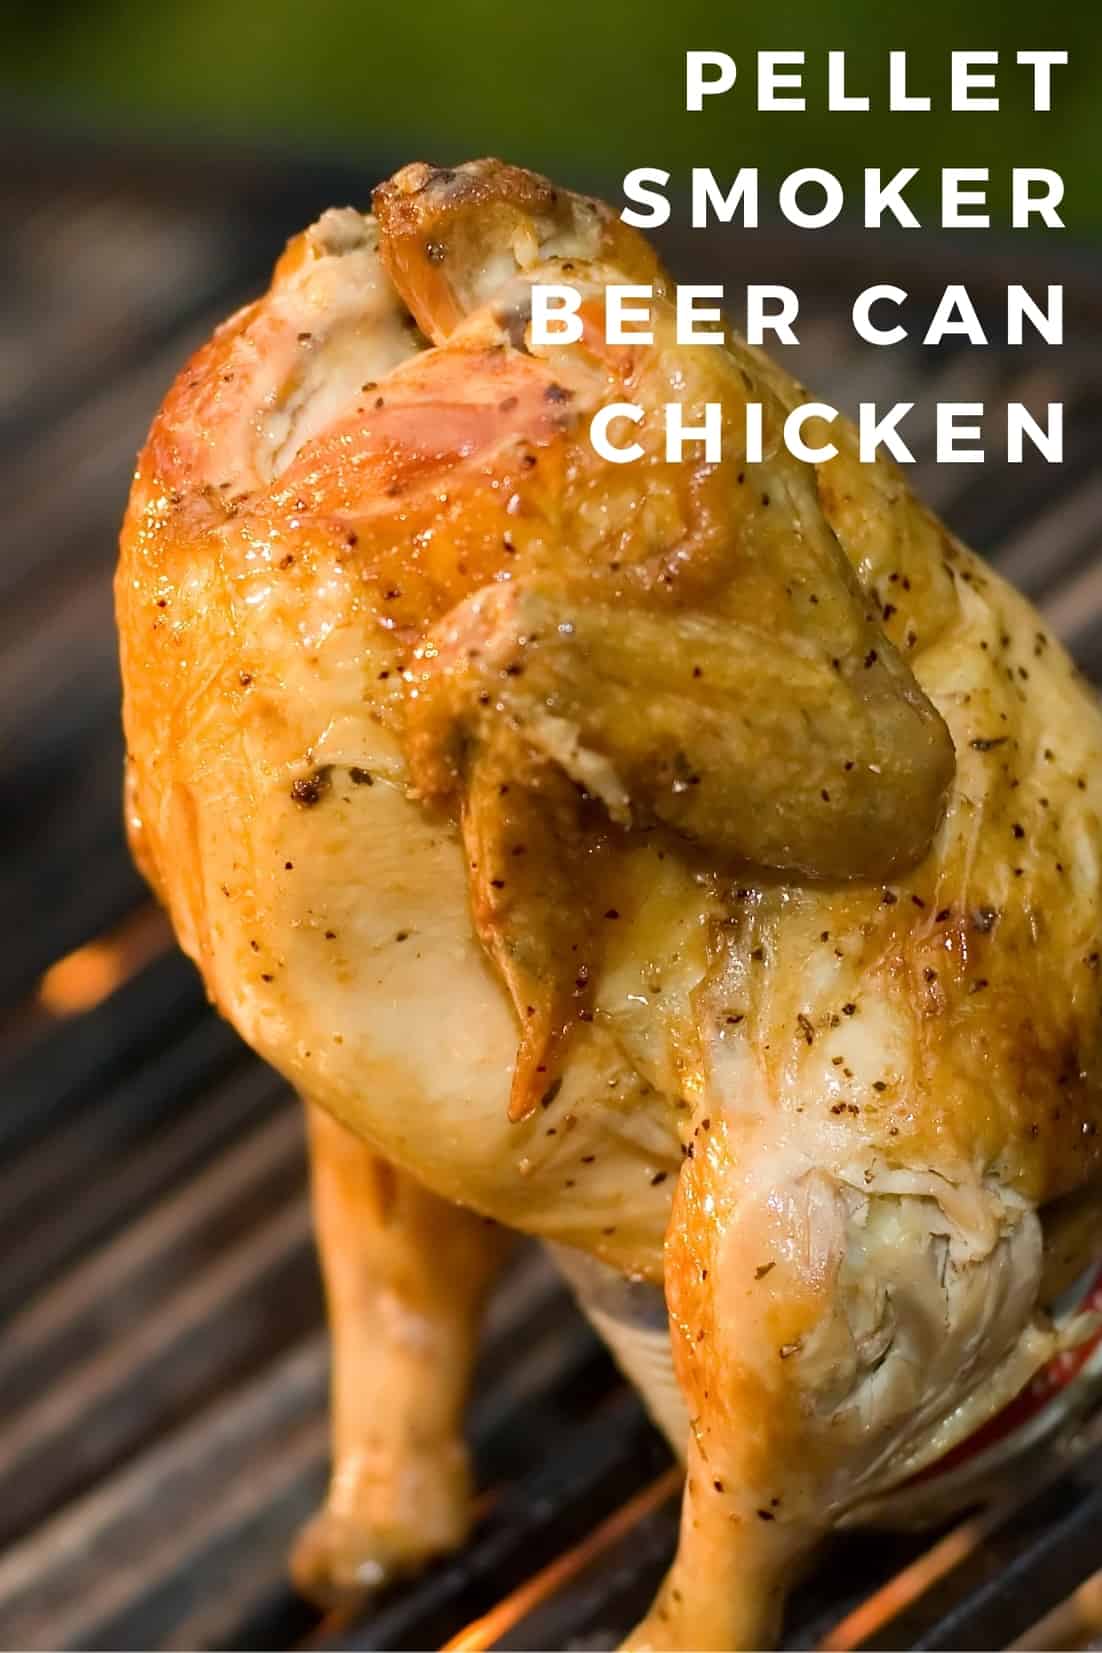 Pellet smoker beer can chicken recipe